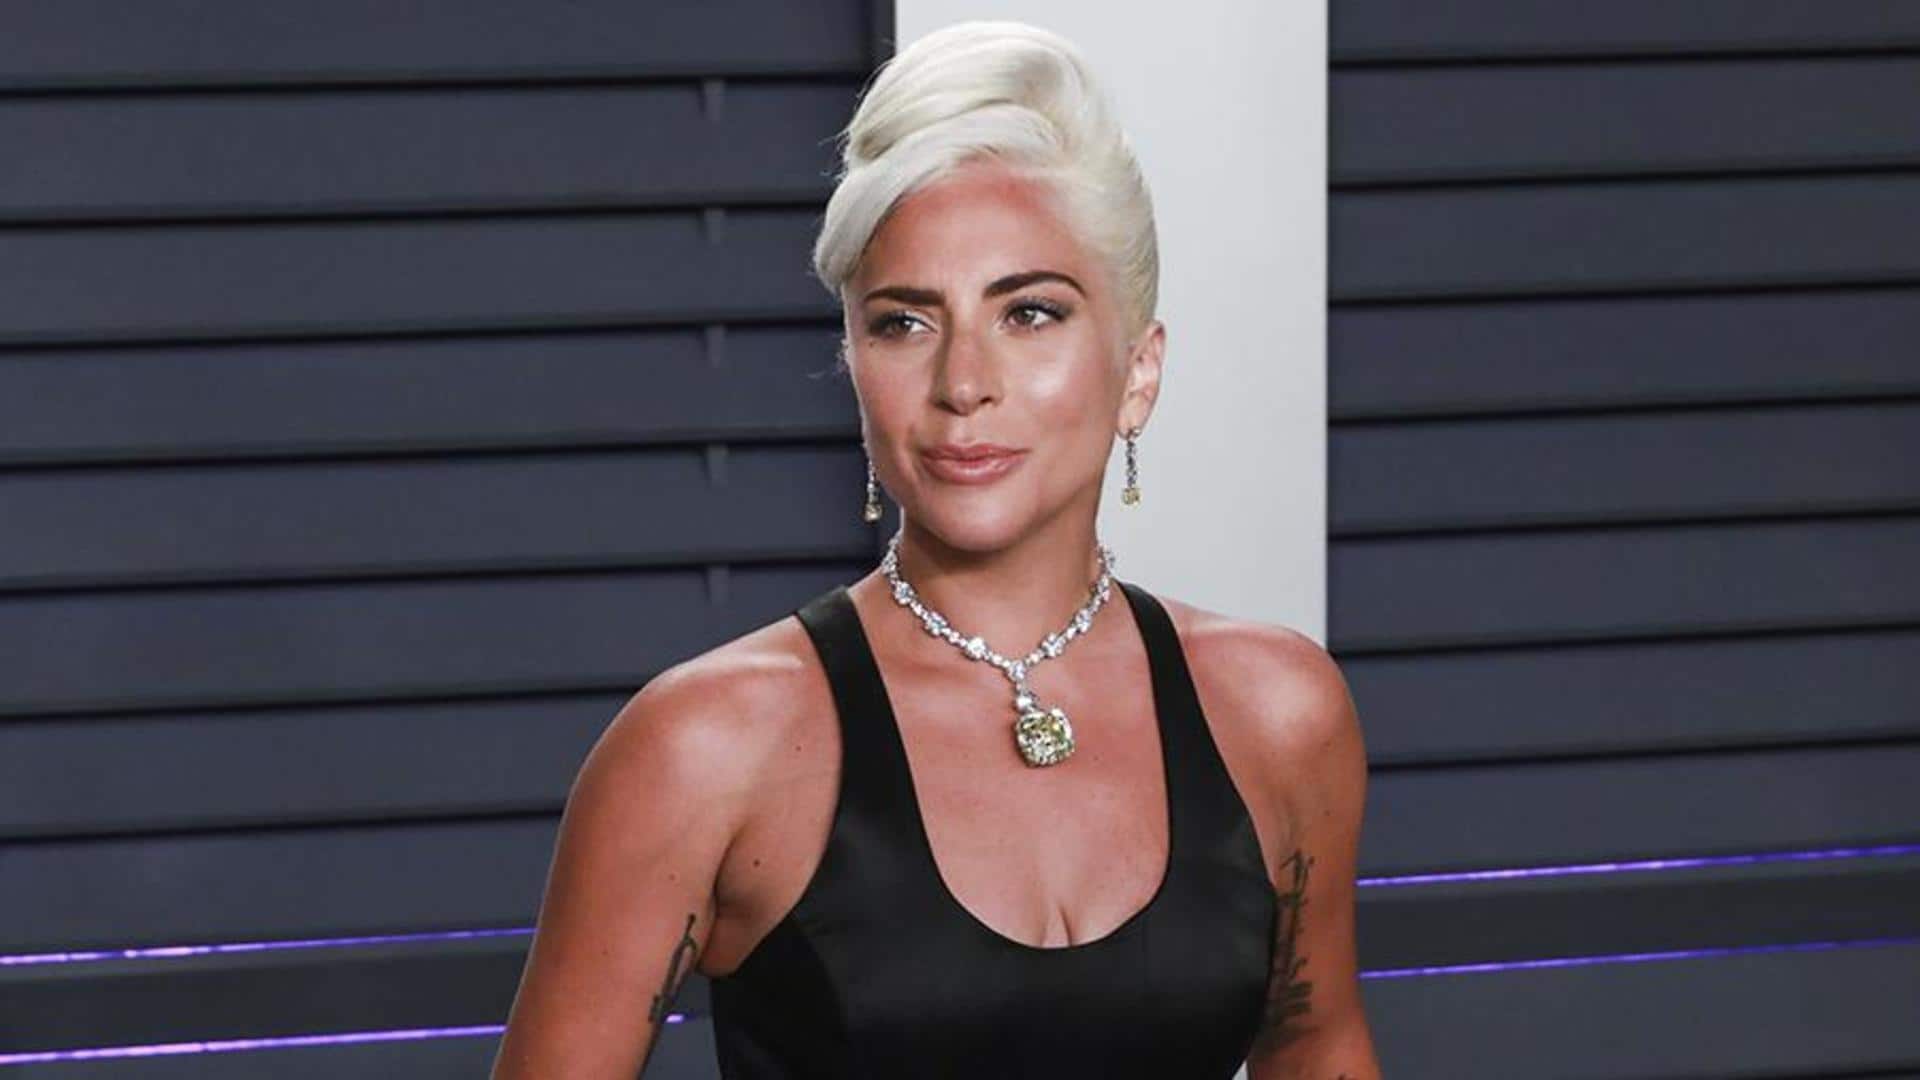 'Chromatica Ball' concert film in development; Lady Gaga shares update